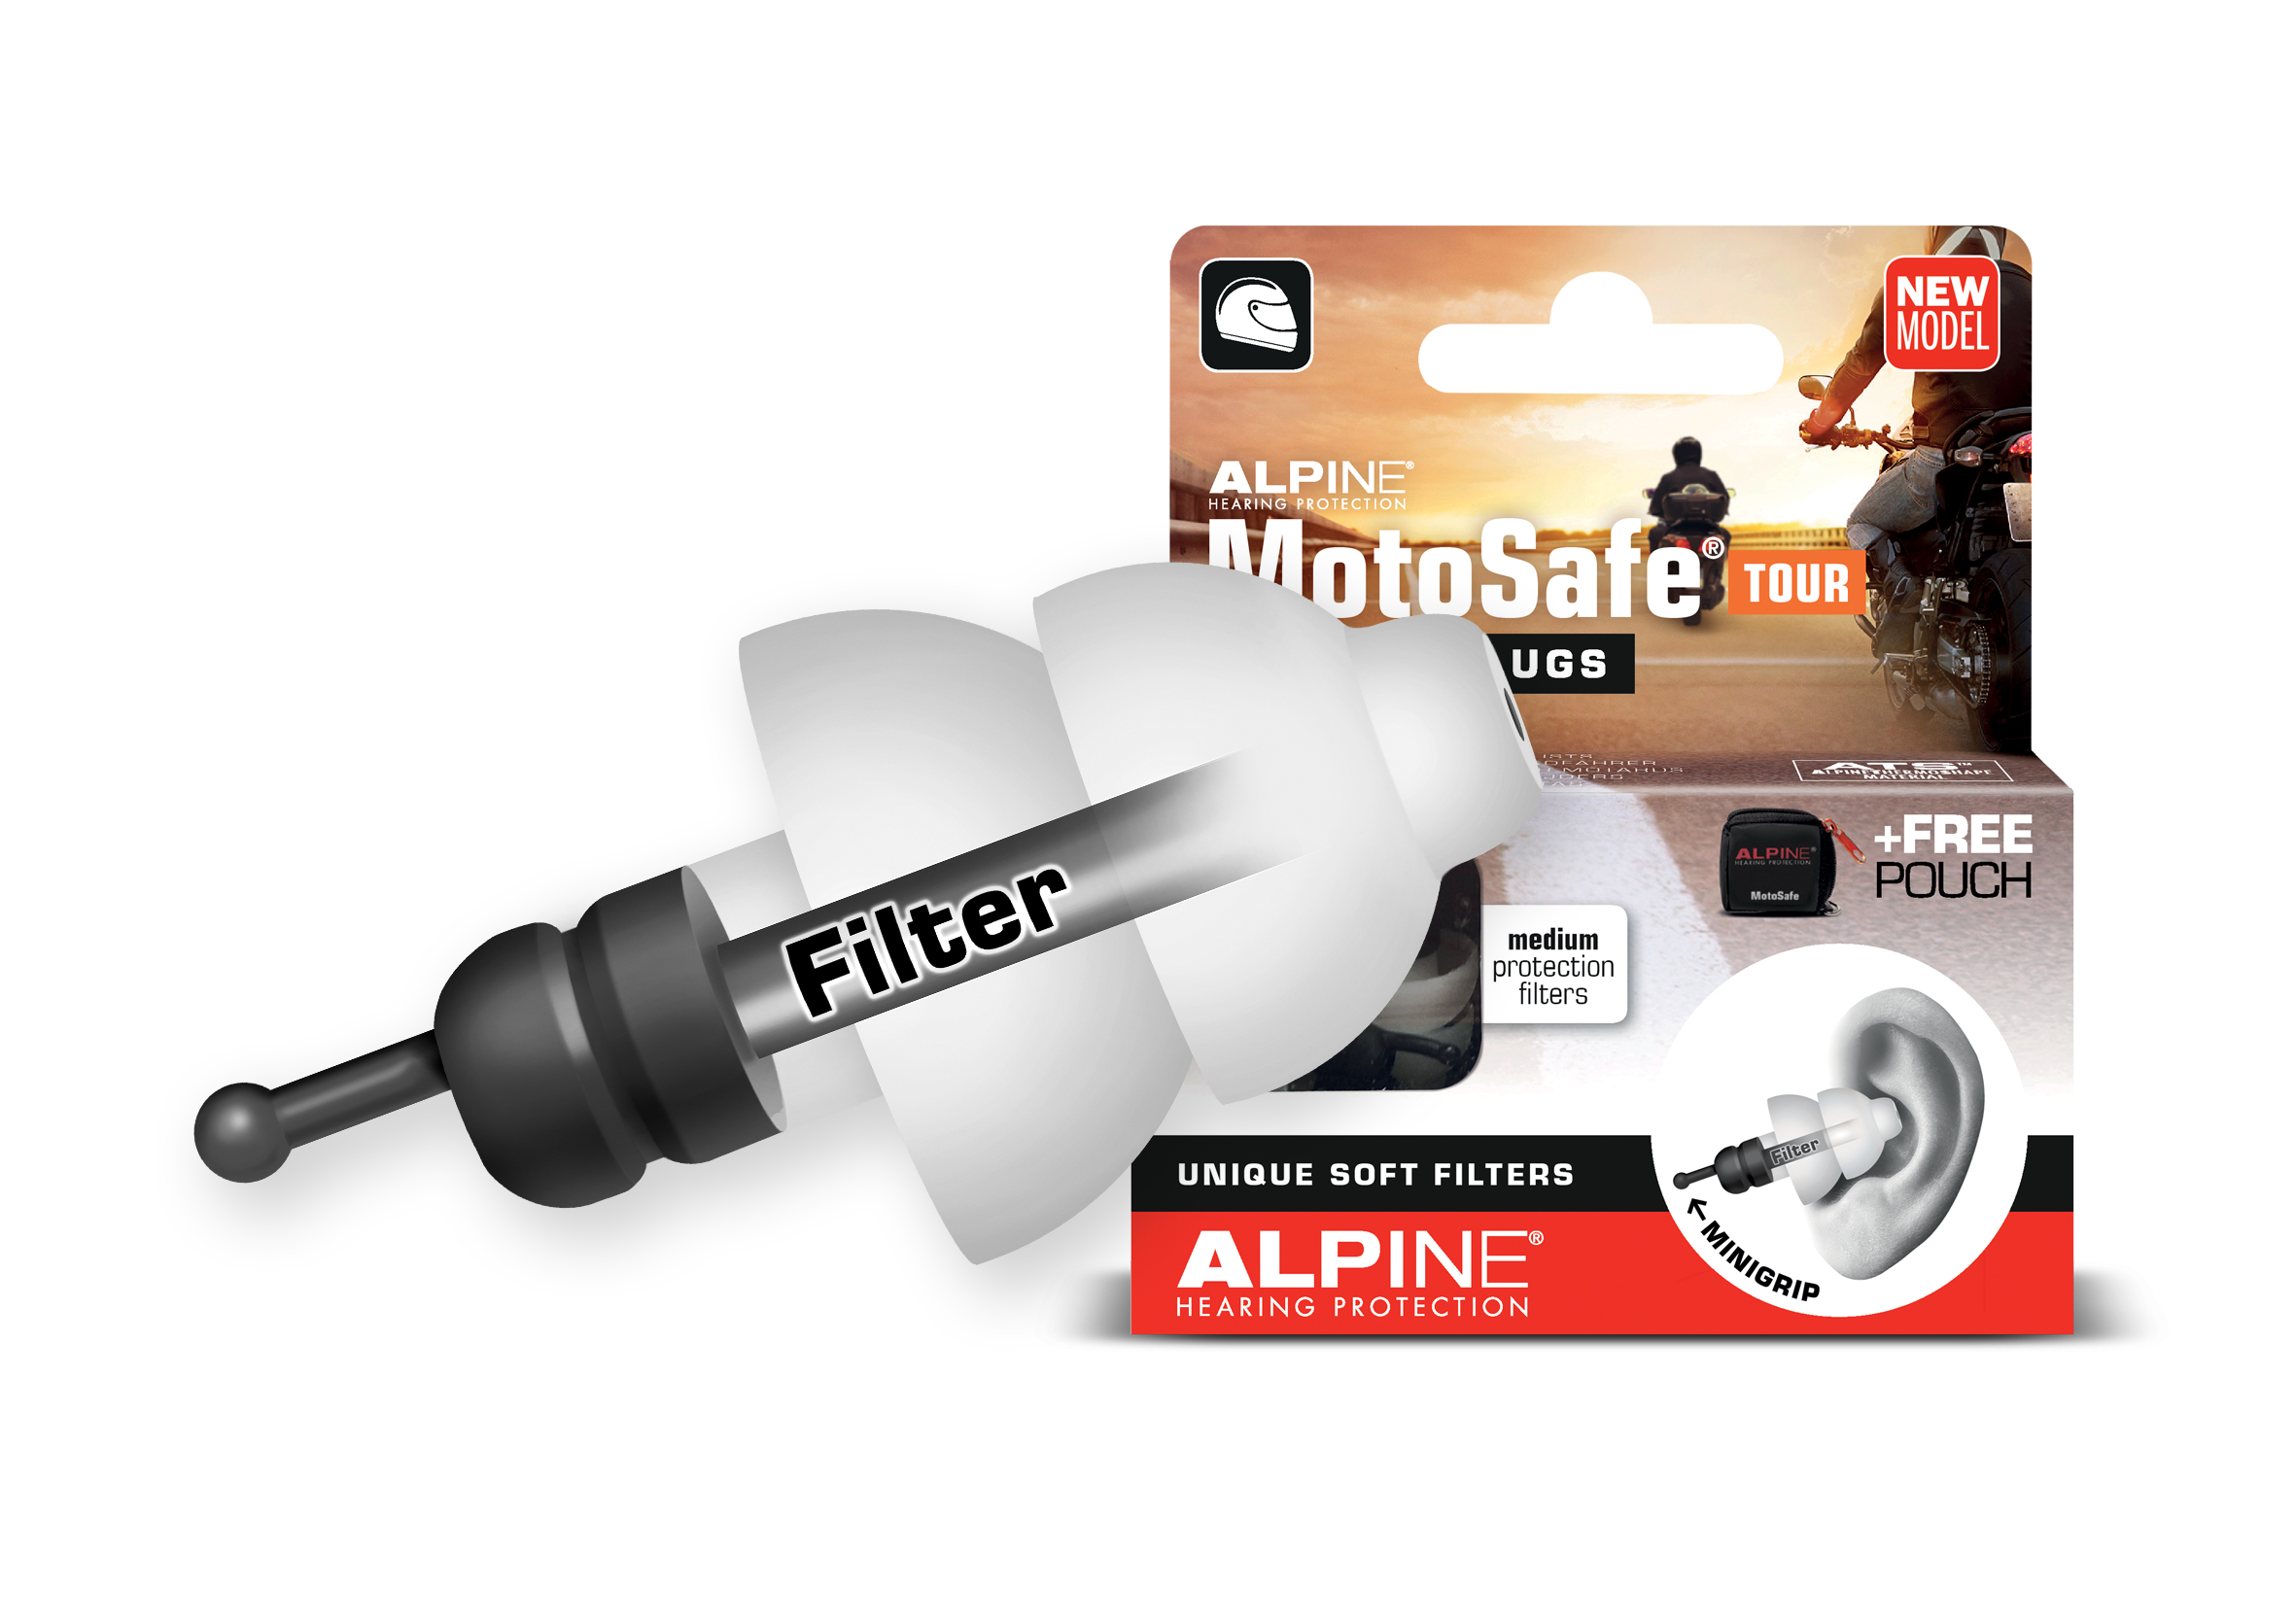 Alpine Motosafe Tour ωτοασπιδες για μοτοσυκλετιστες